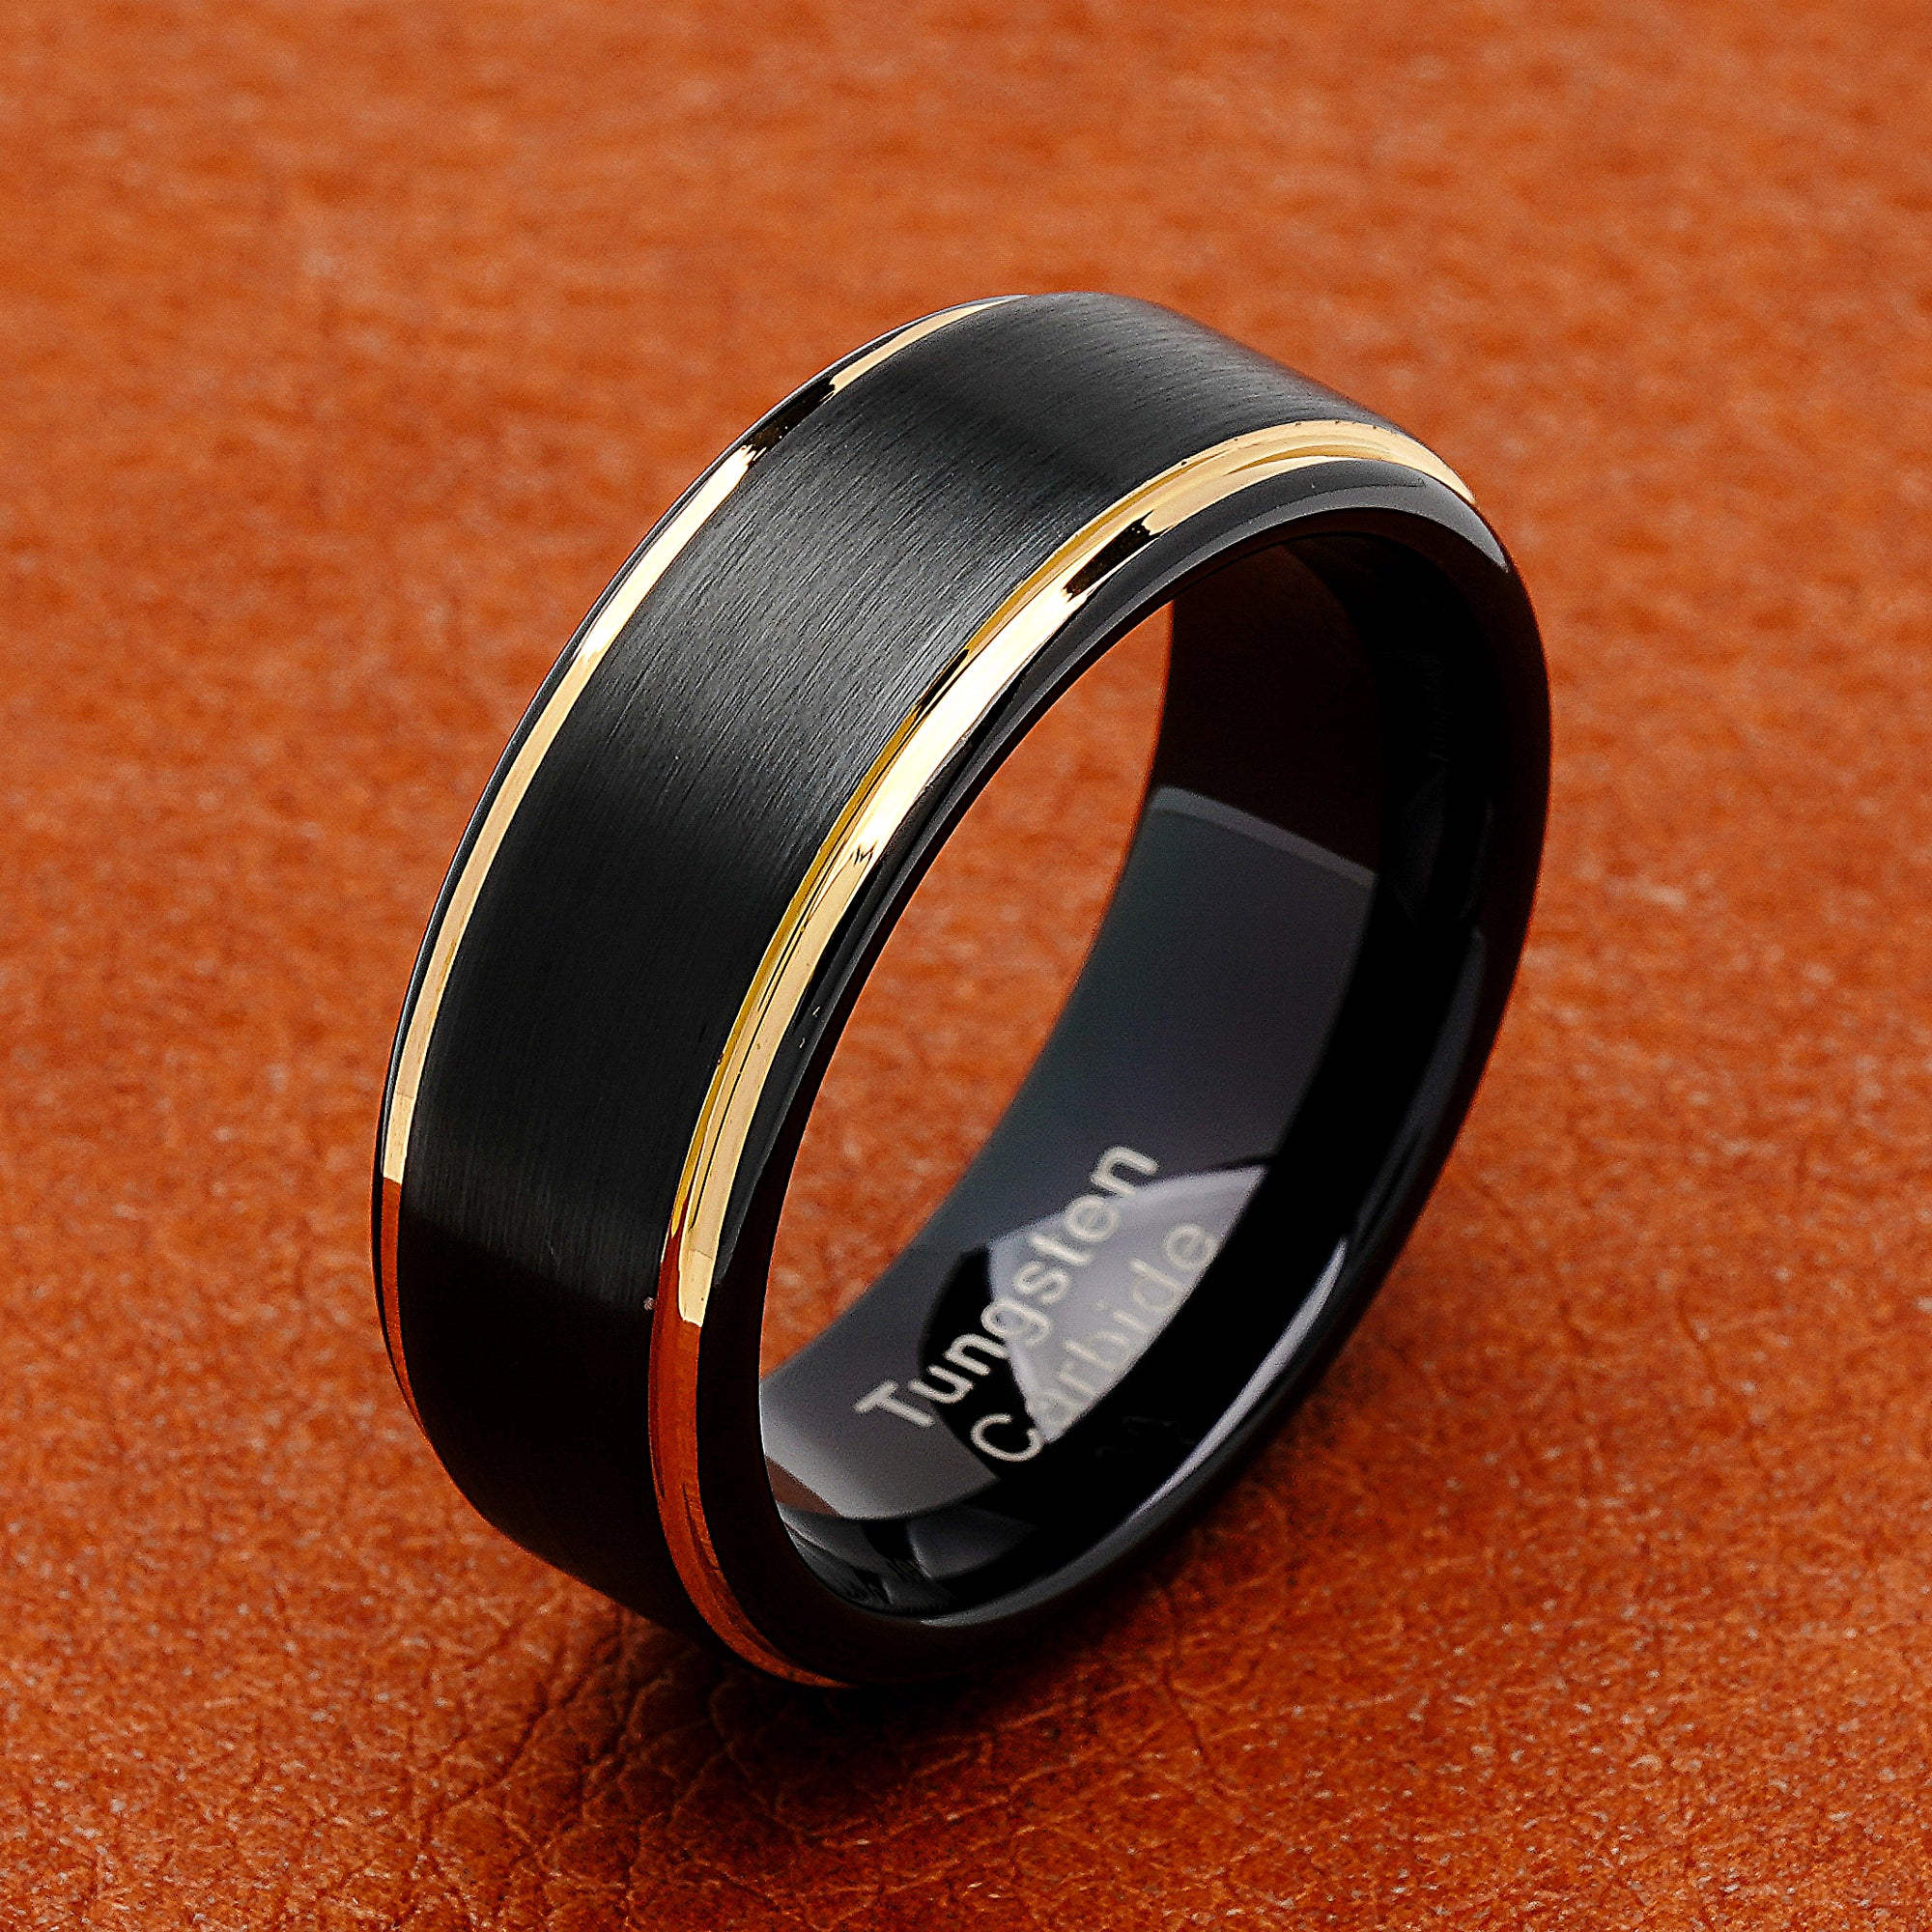 Allan Ring - Vidar Jewelry - Unique Custom Engagement And Wedding Rings